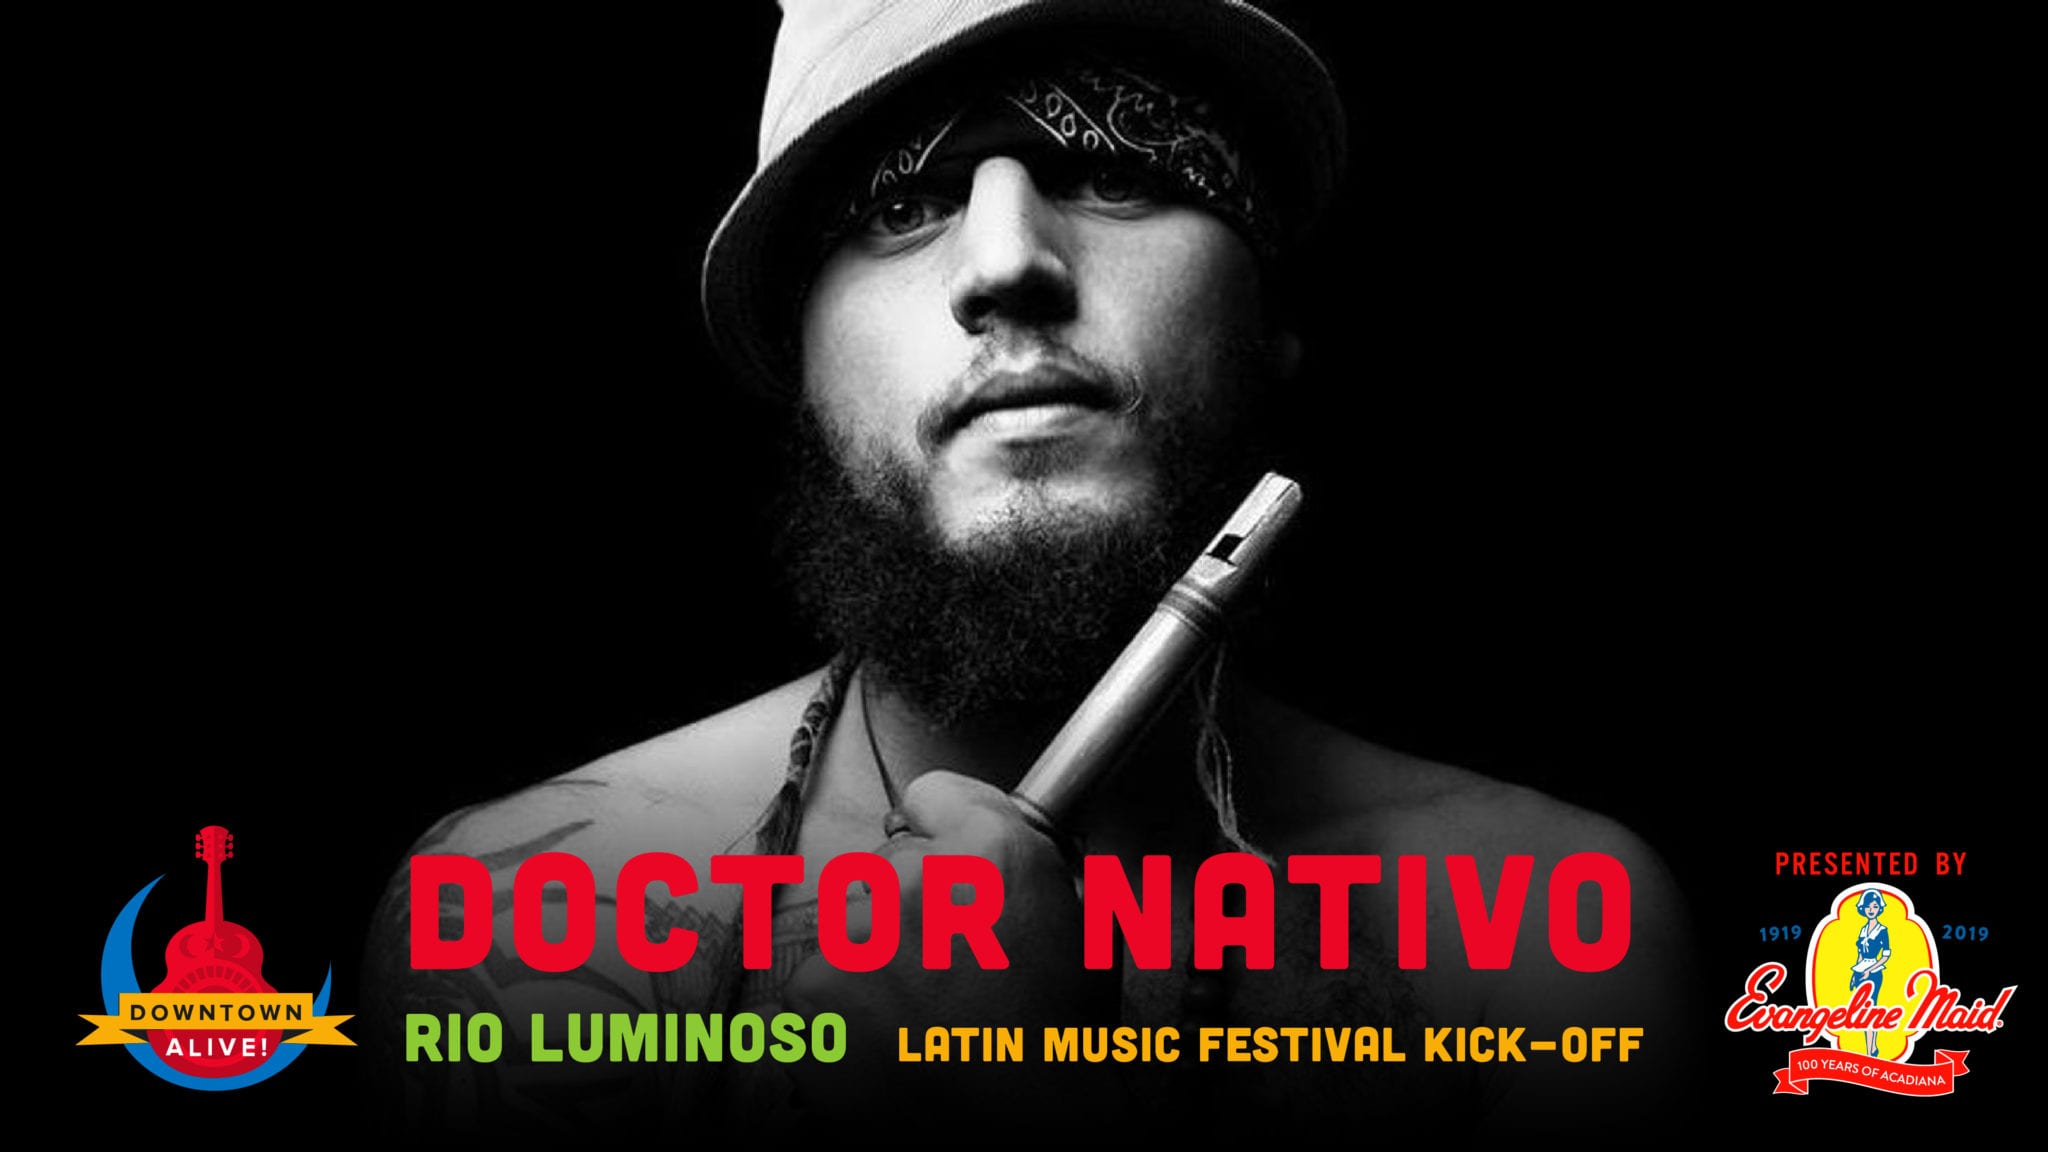 Doctor Nativo + Rio Luminoso at Downtown Alive!